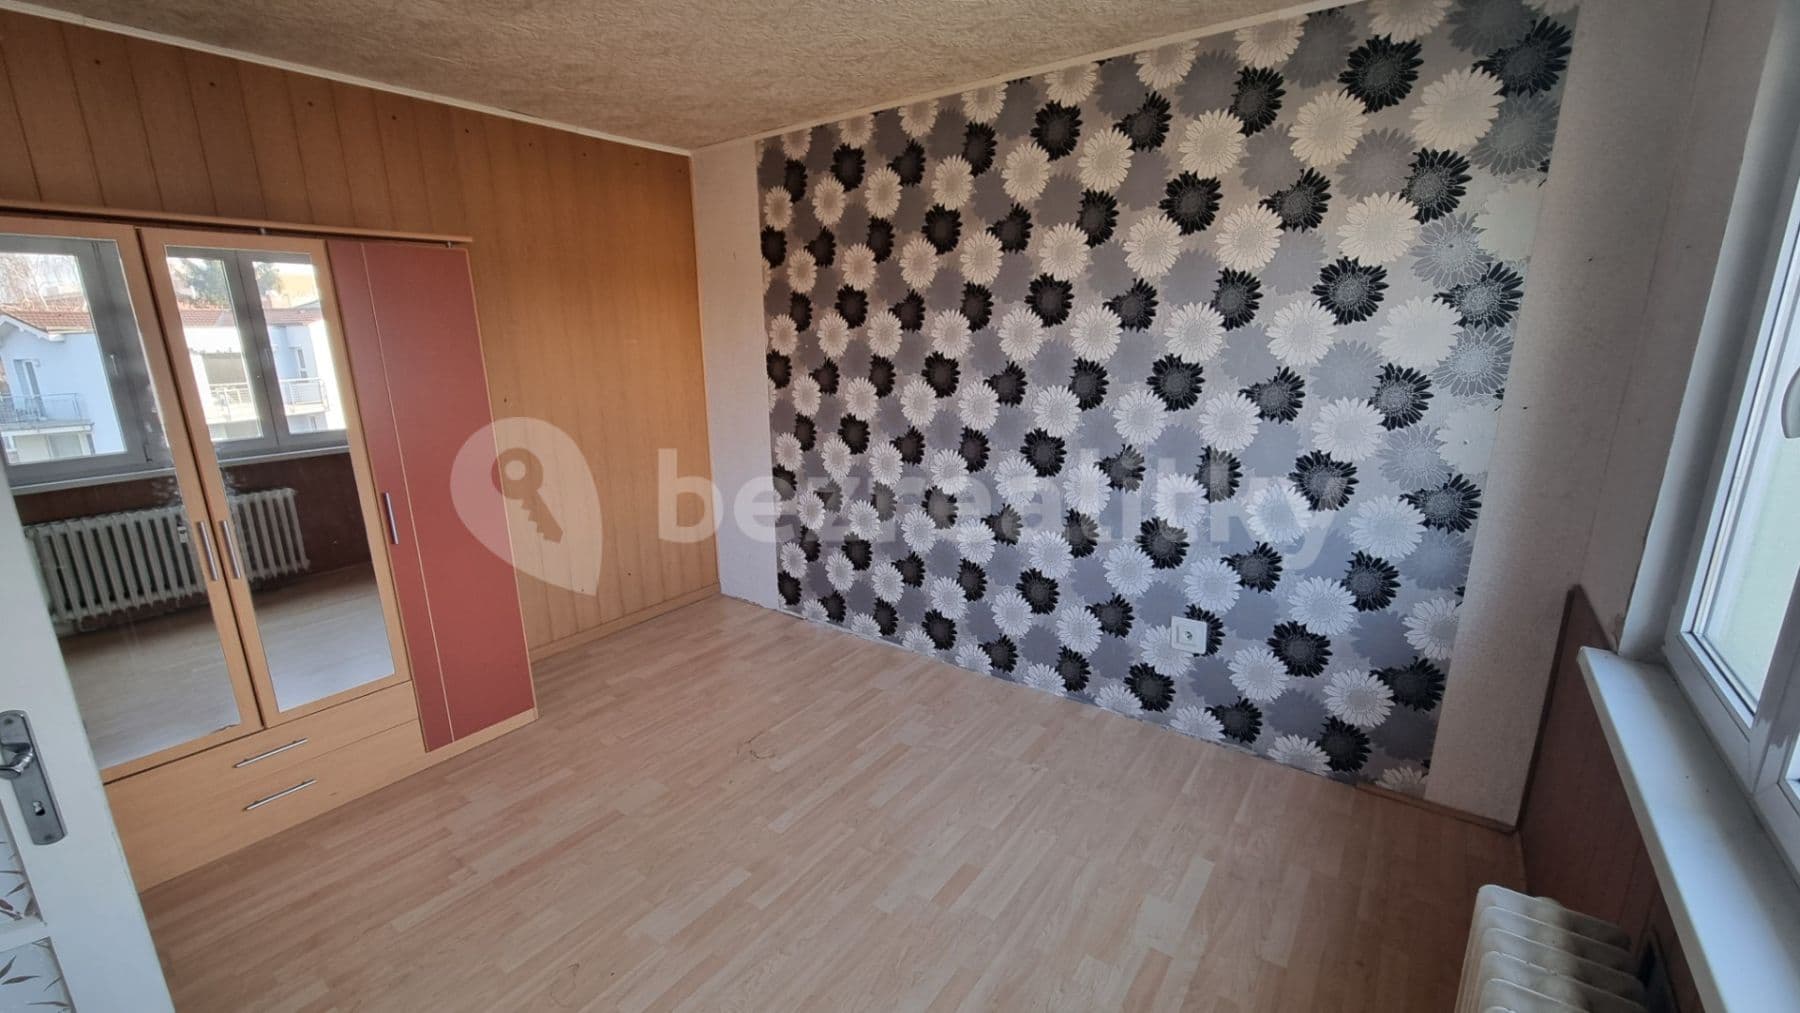 2 bedroom flat for sale, 54 m², Antala Staška, Prague, Prague